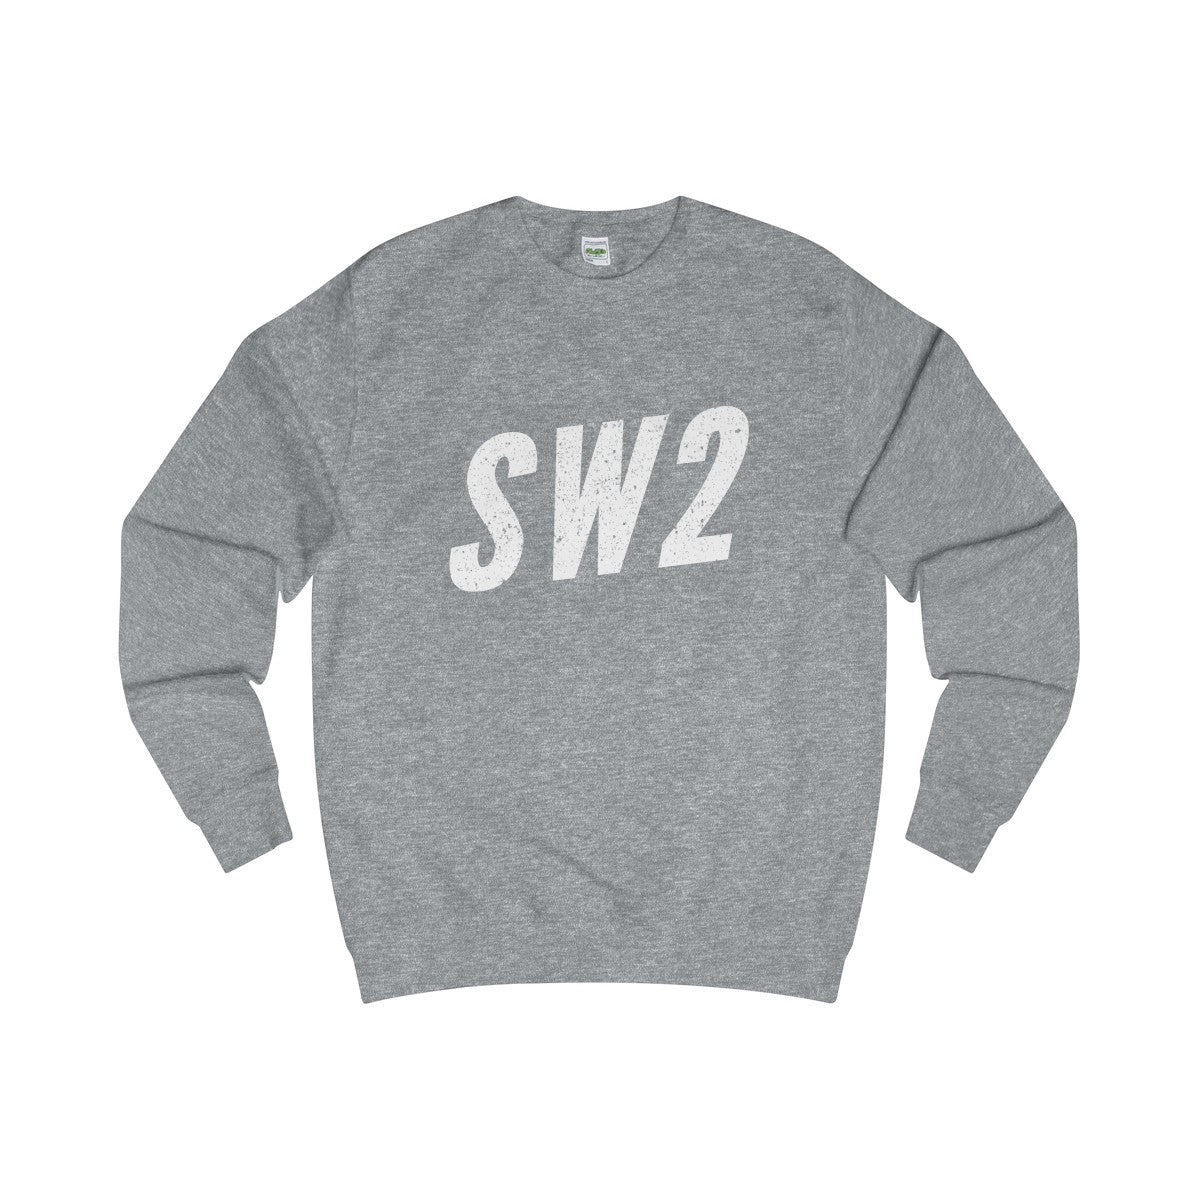 Brixton SW2 Sweater